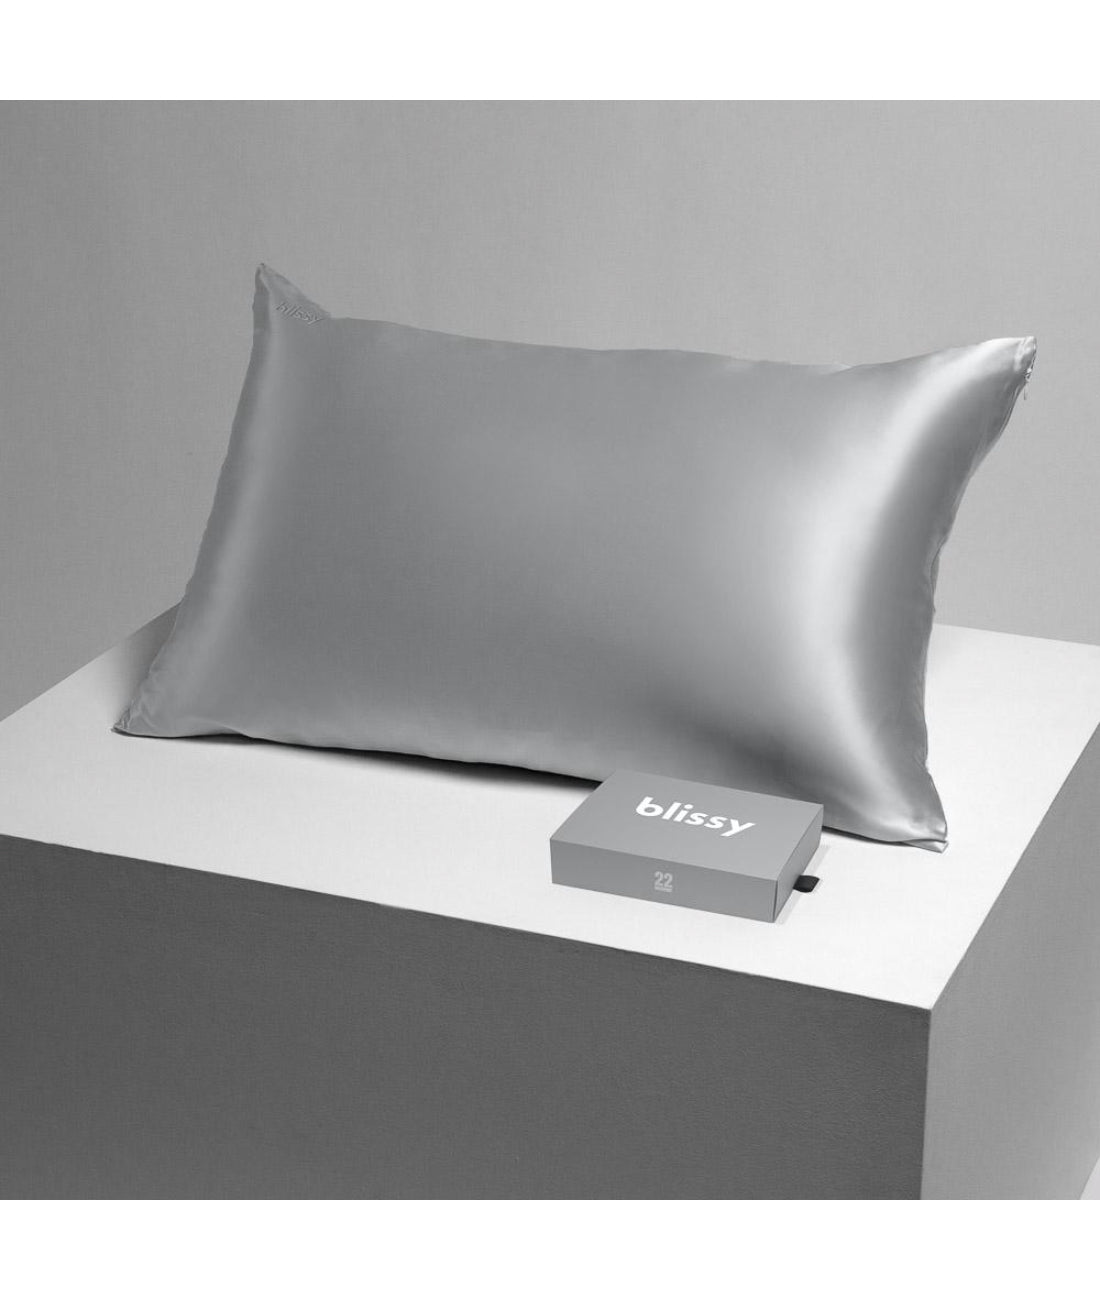 Blissy Pillow Case - Silver